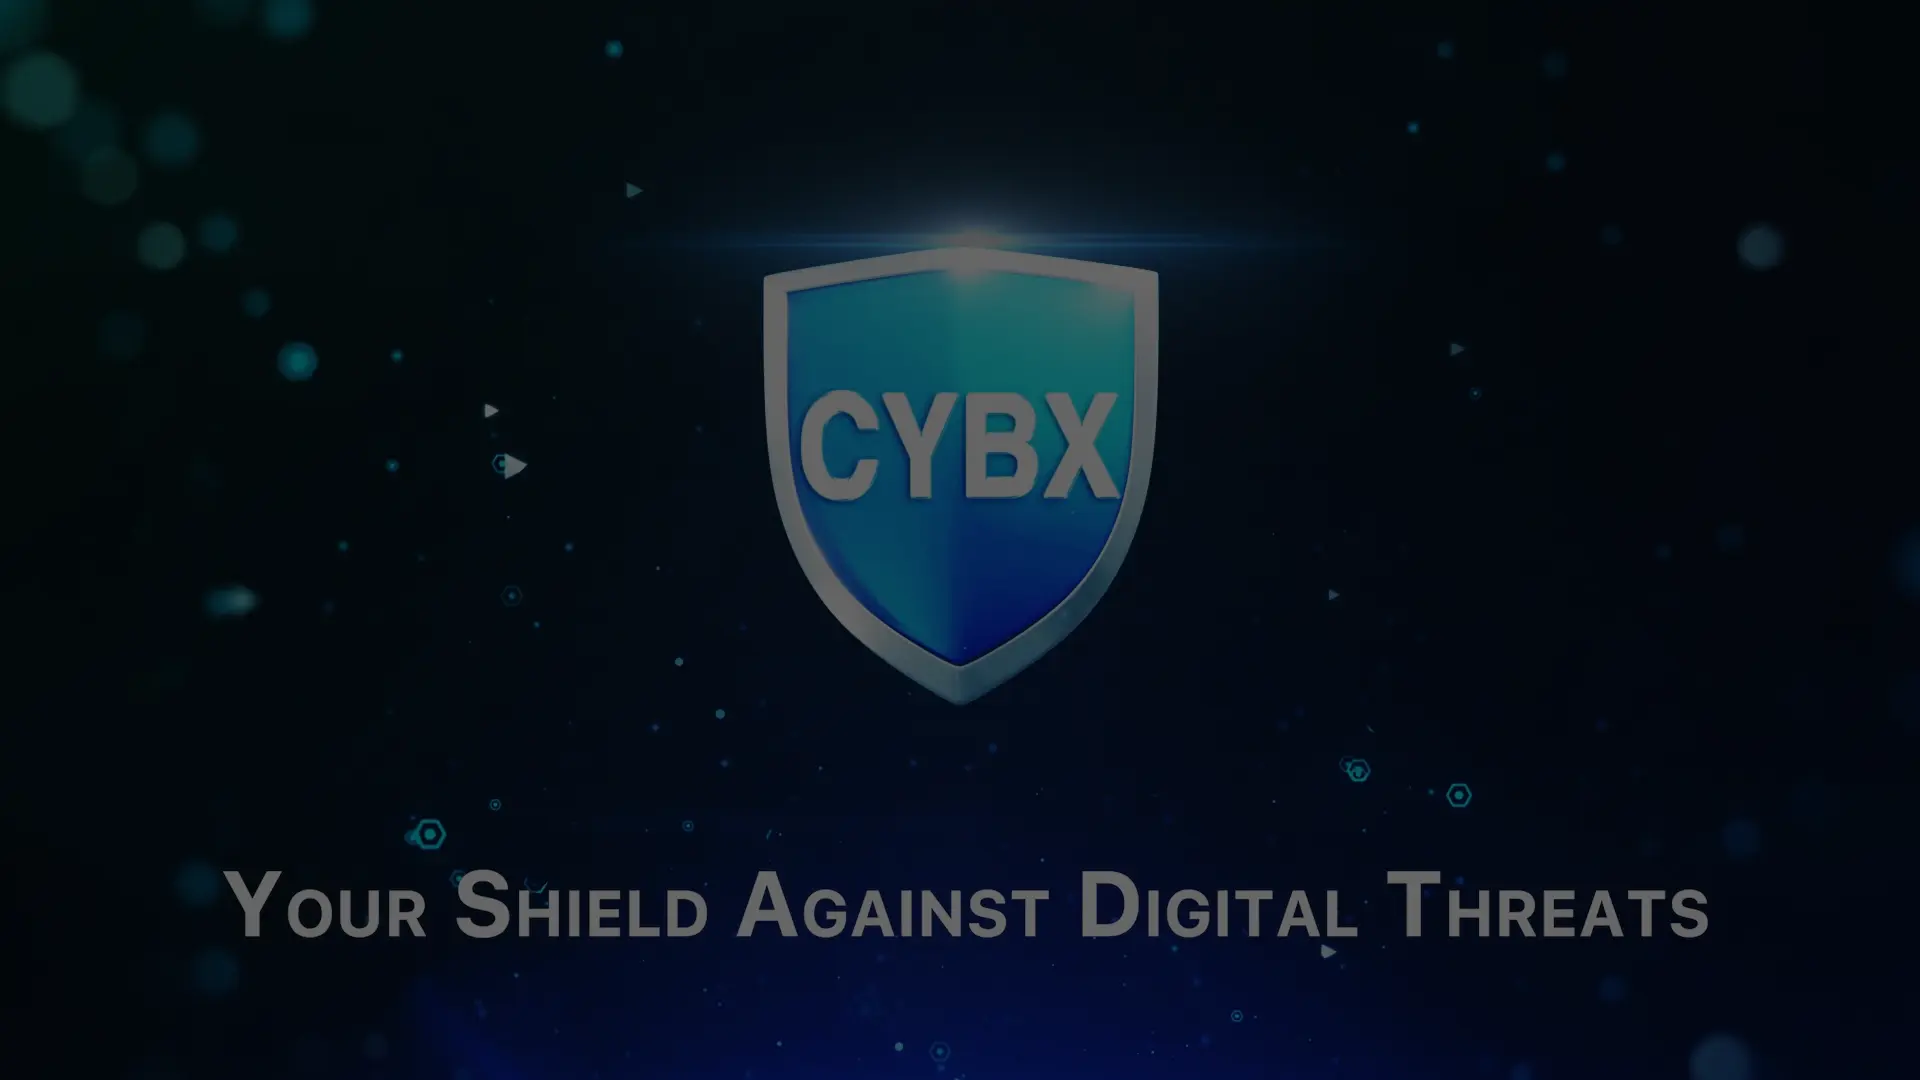 CYBX Video 2 63 Sats Cybersecurity India